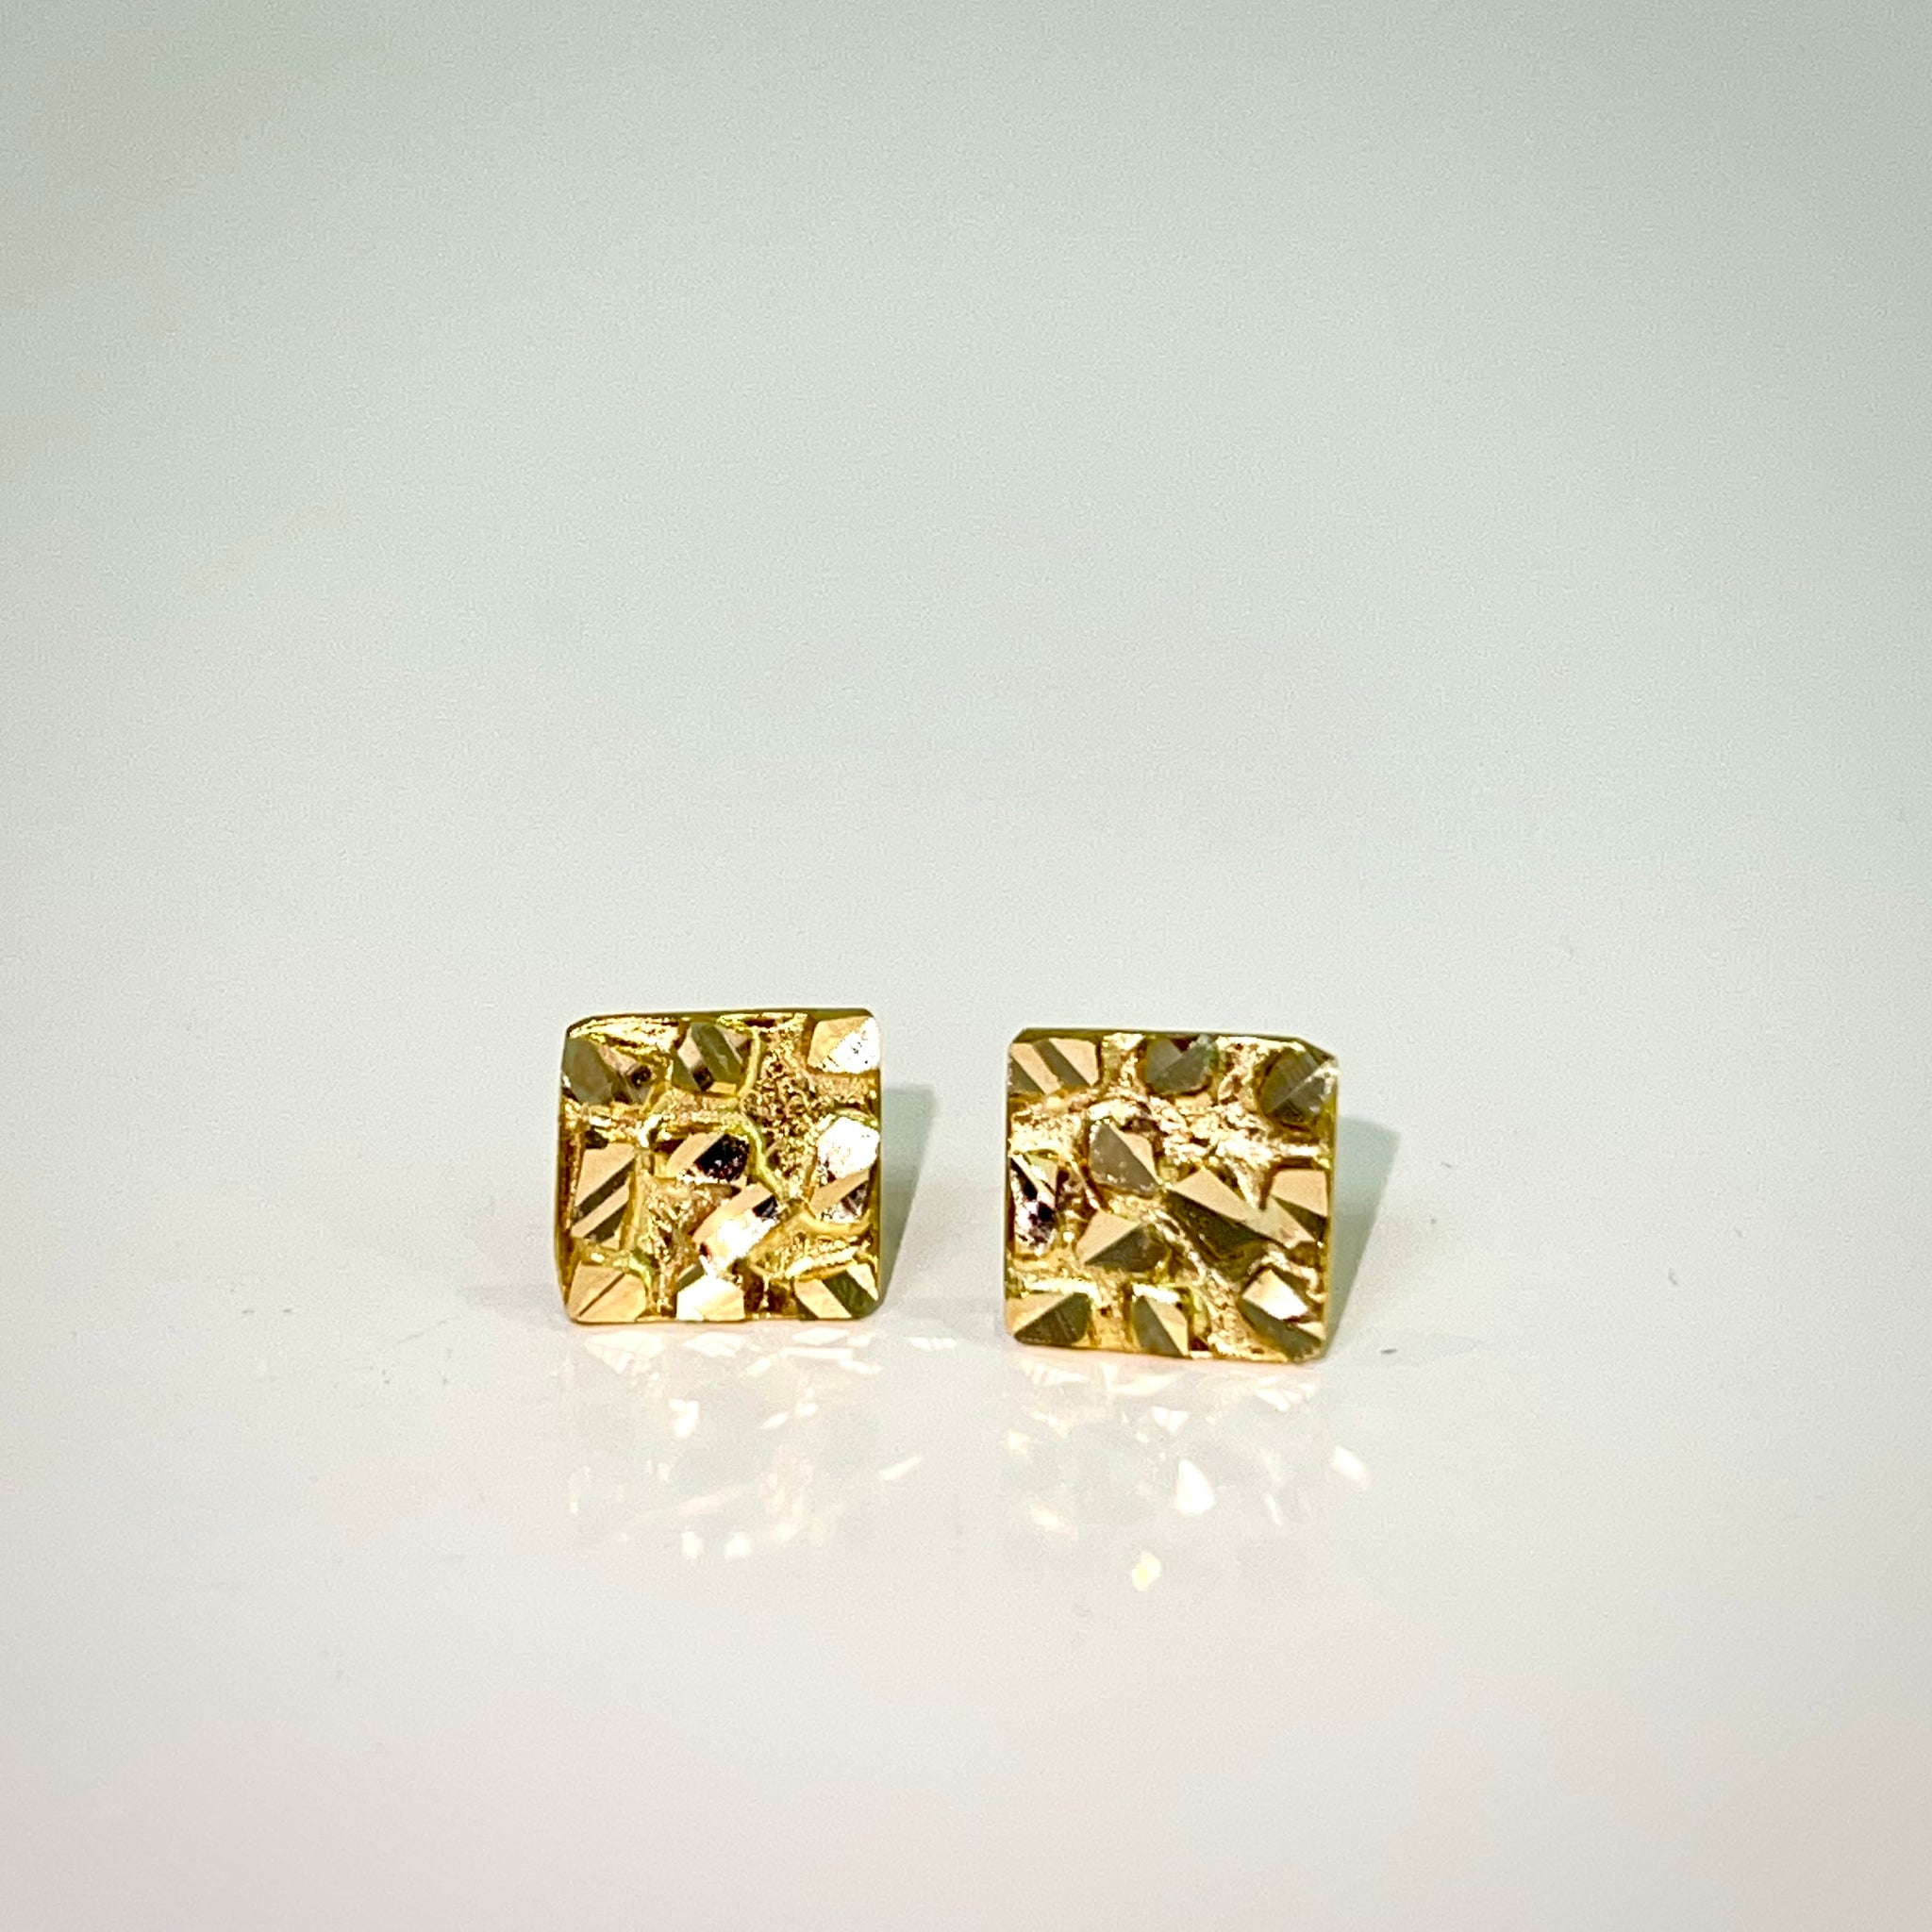 Piet Piet Earrings - 18 carat gold